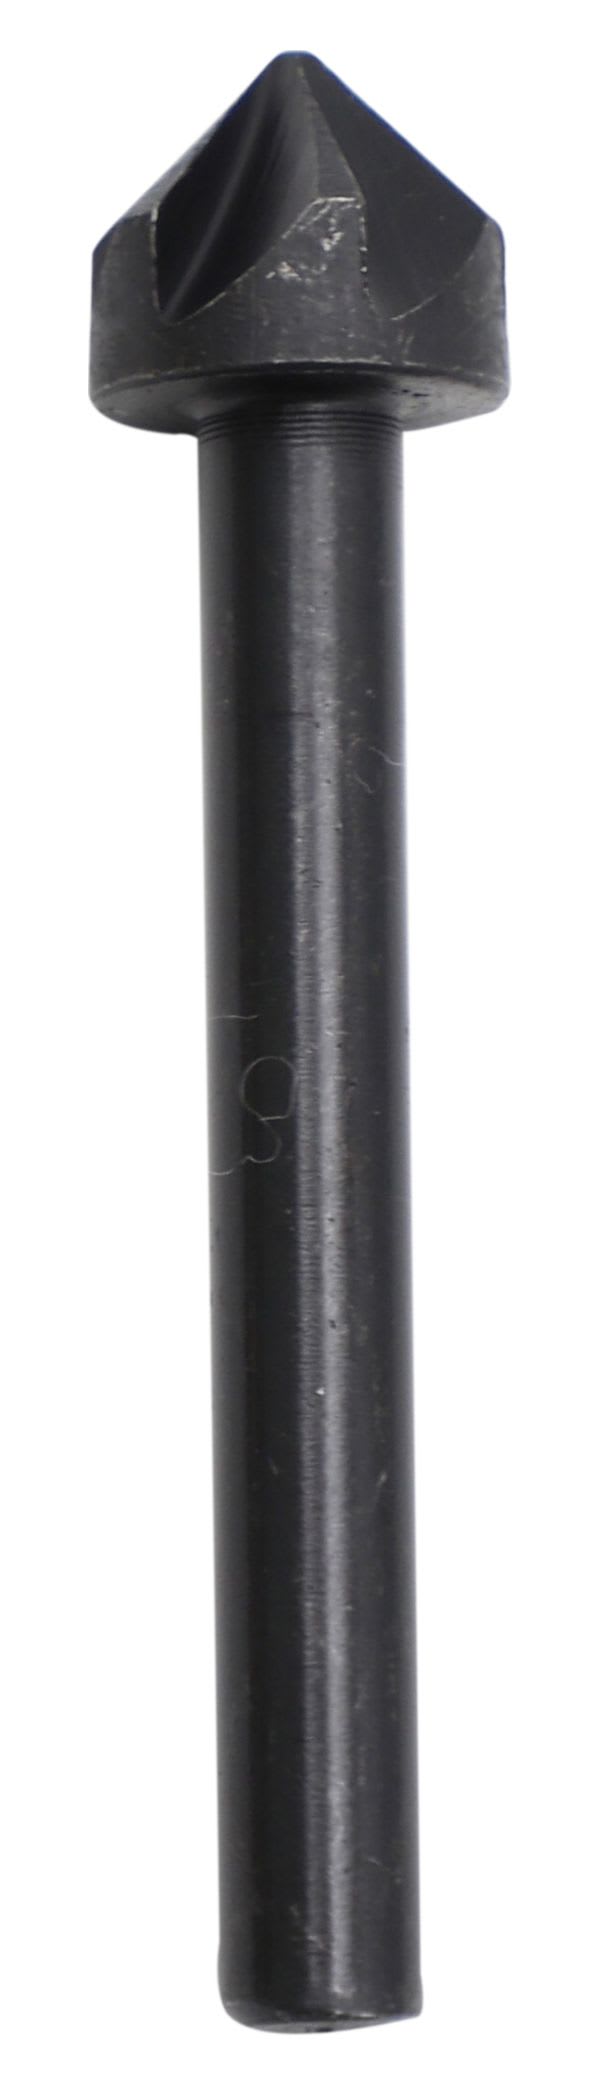 Wickes Countersink Drill Bit - 13mm